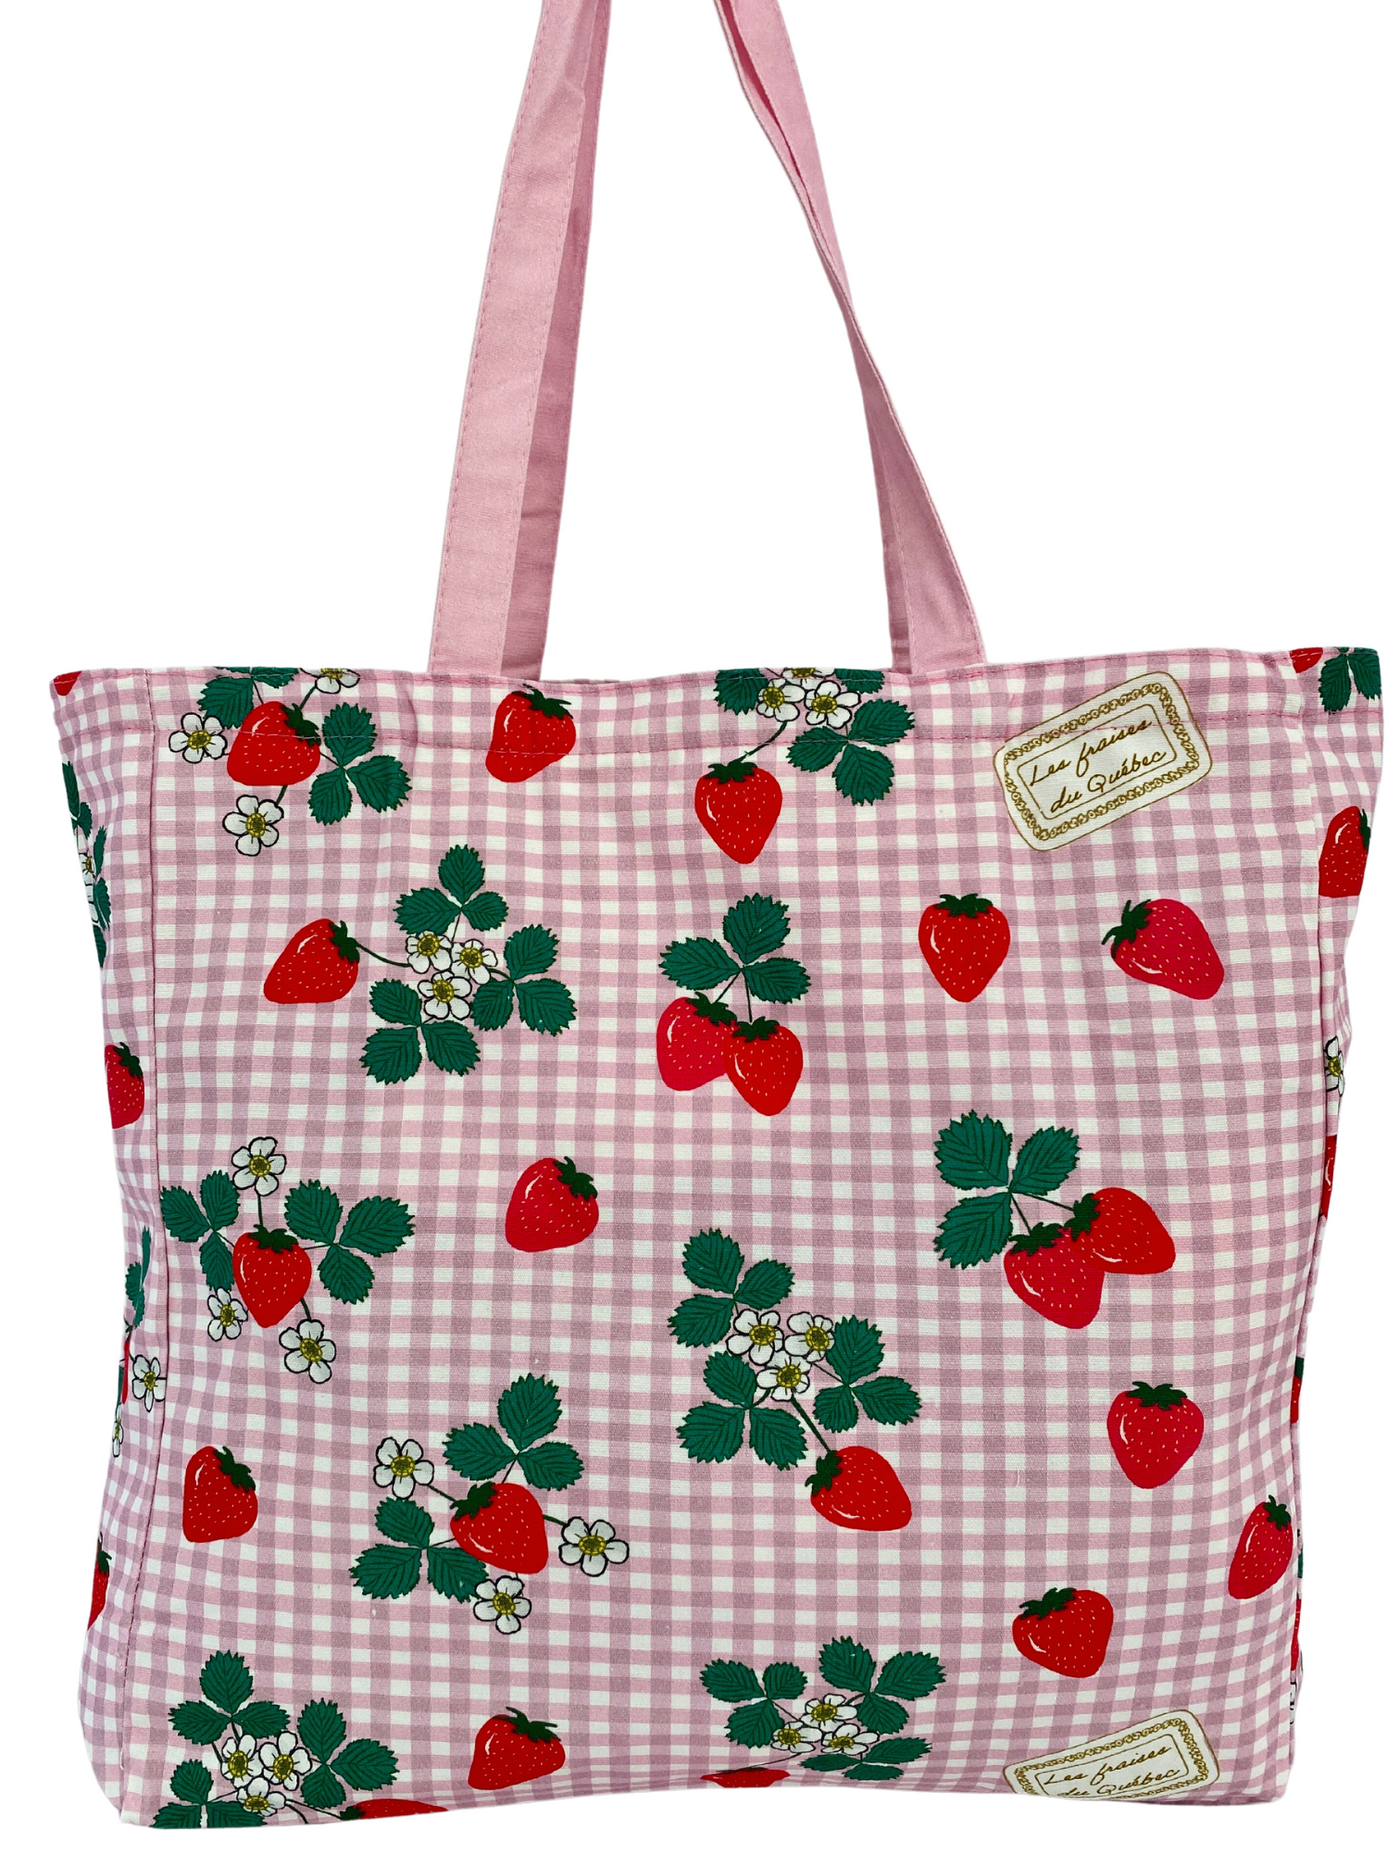 Illustrated Tote Bag: Quebec Strawberries